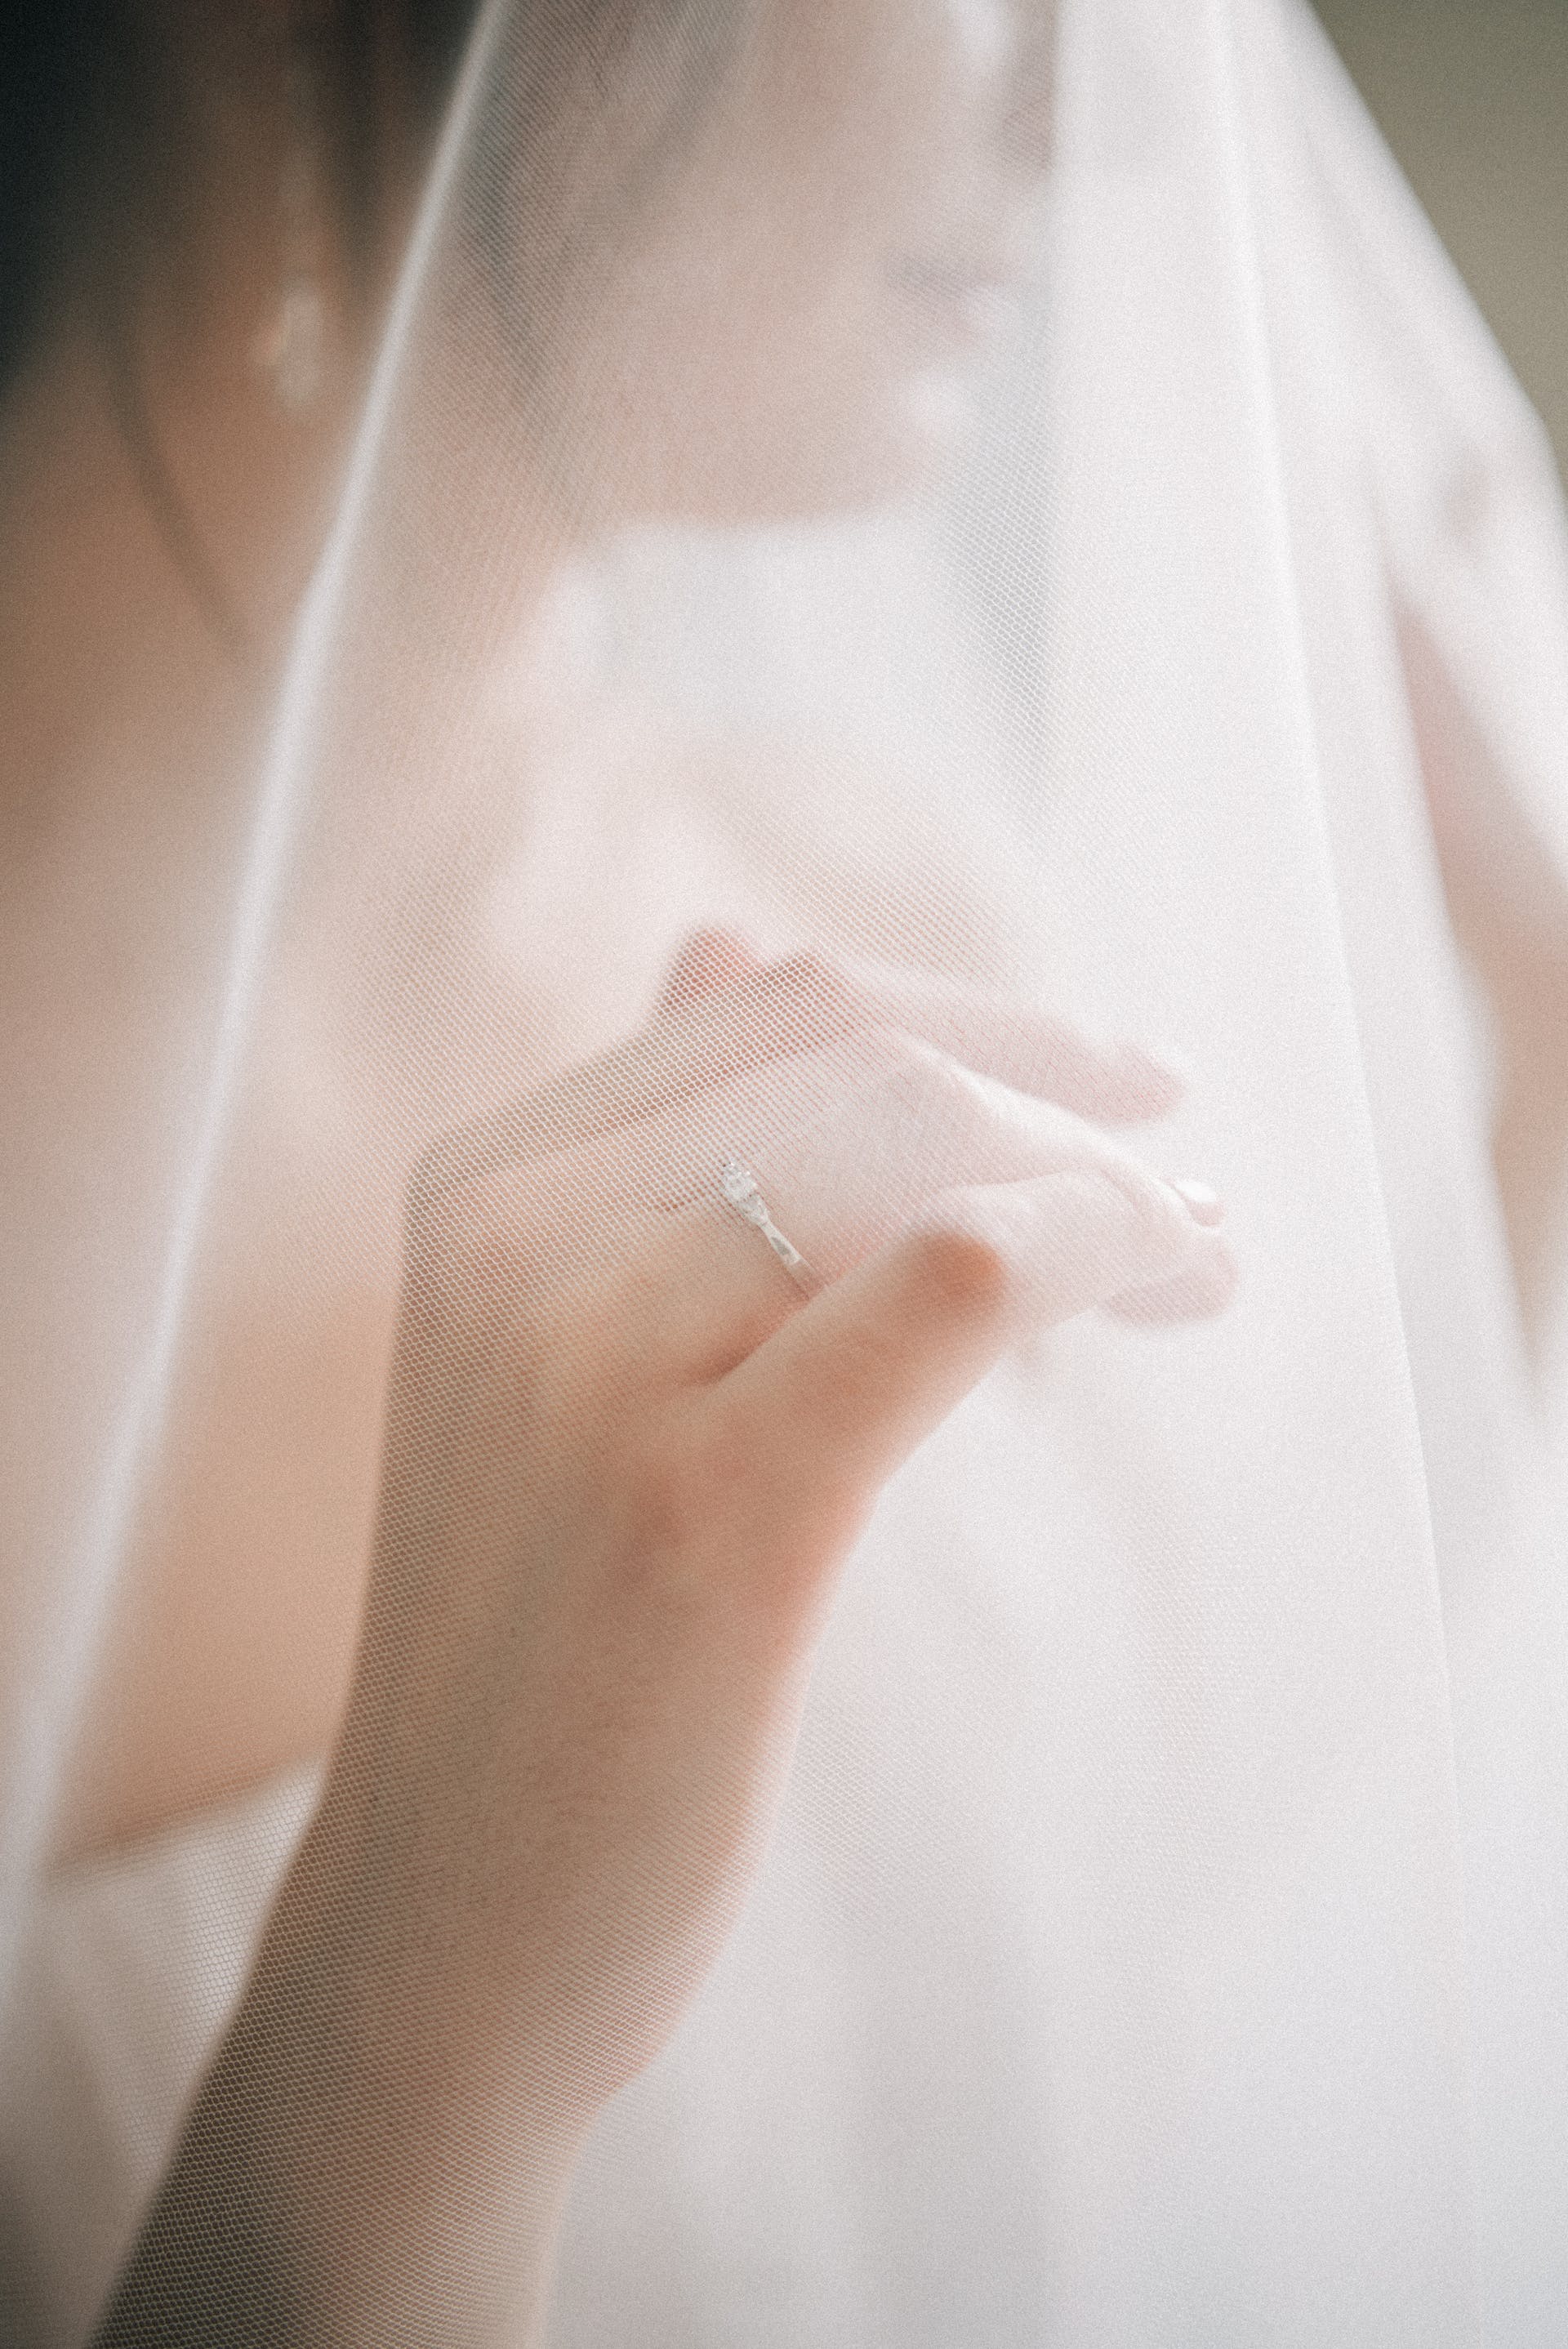 Close up of a bride's hand | Source: Pexels